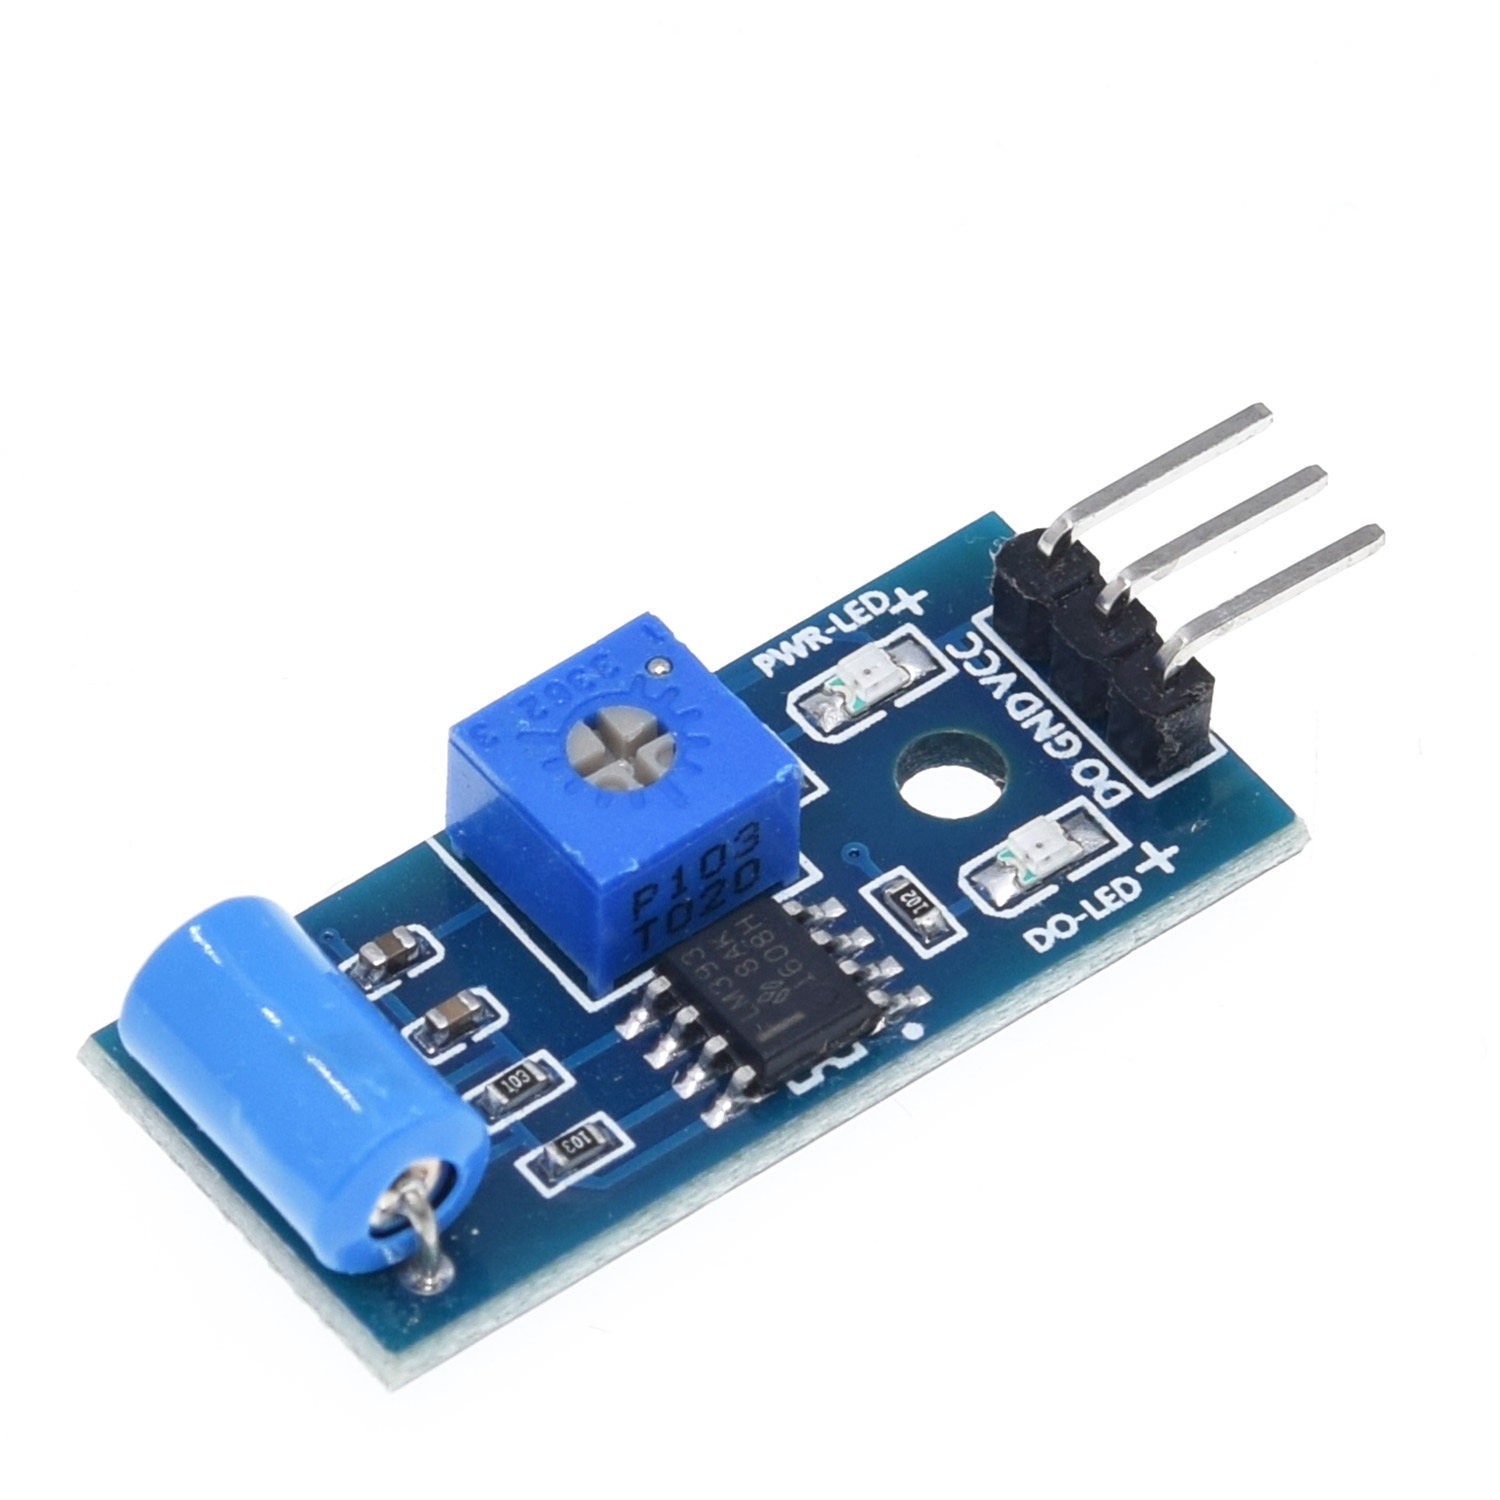 Normally closed type vibration sensor module Alarm sensor module Vibration switch SW-420 for arduino